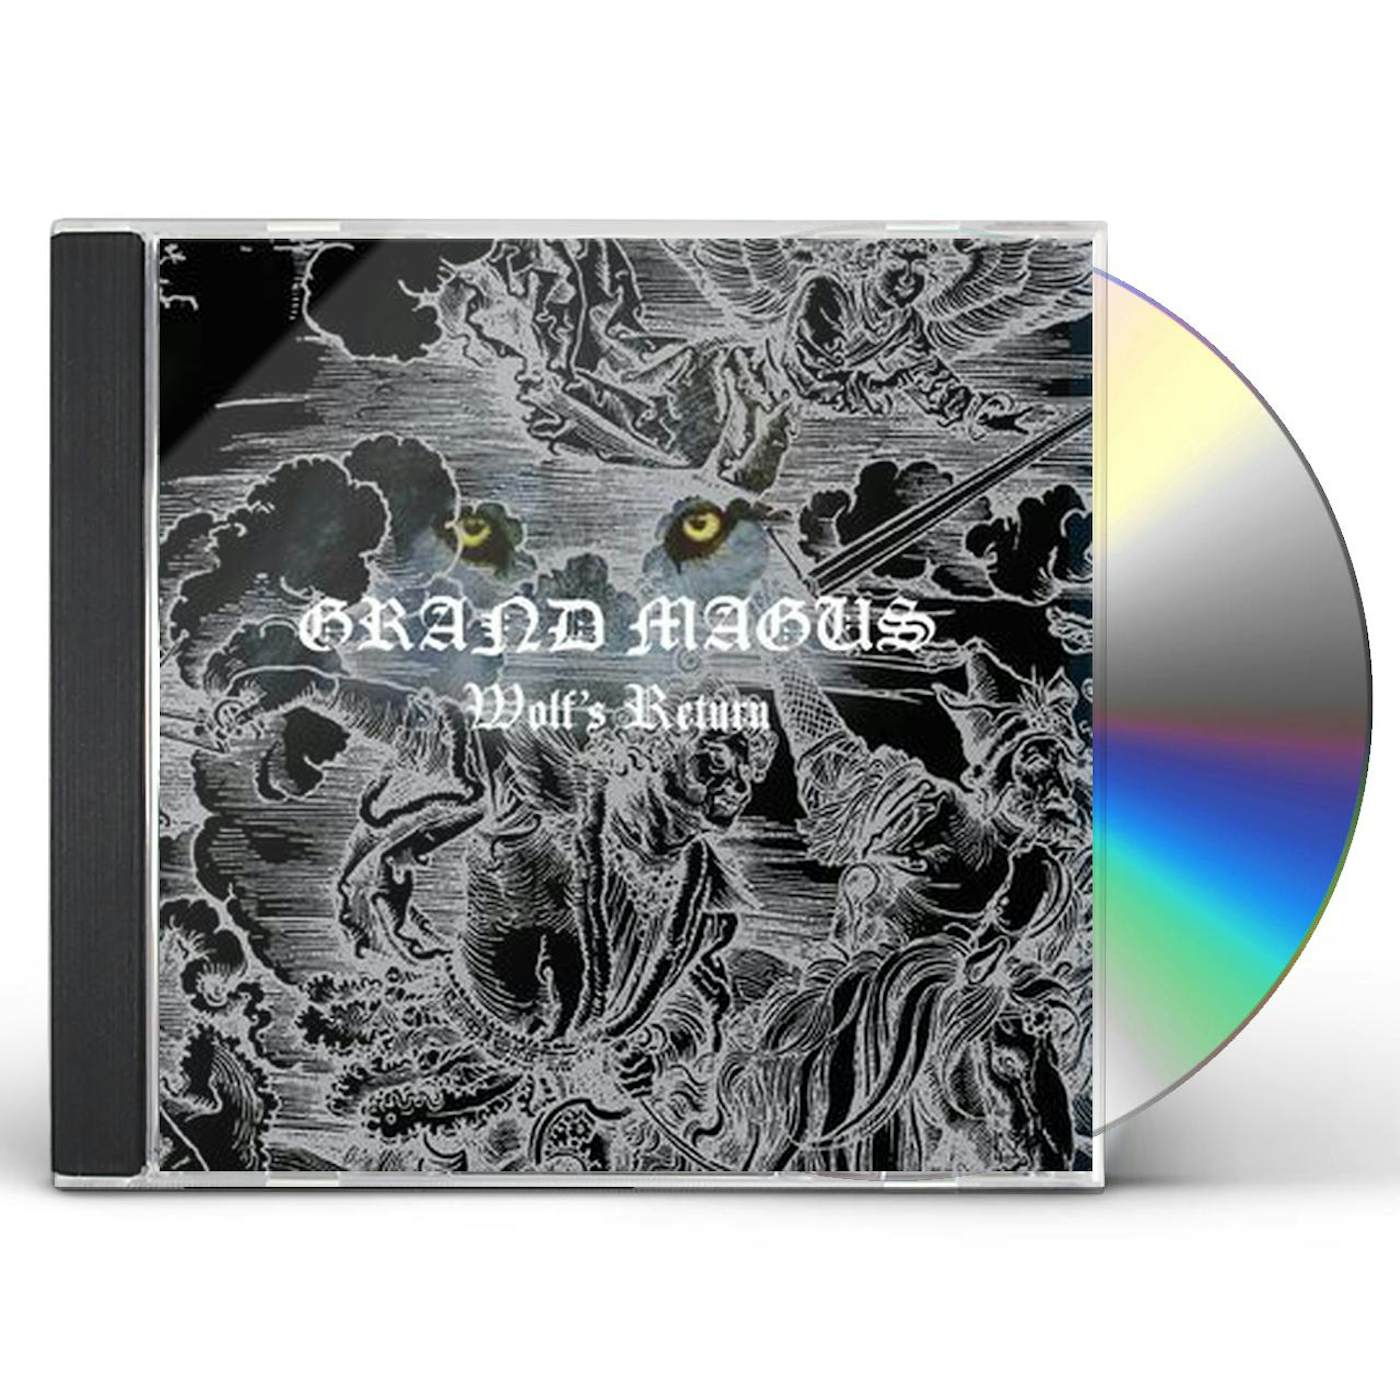 Grand Magus Wolf's return CD